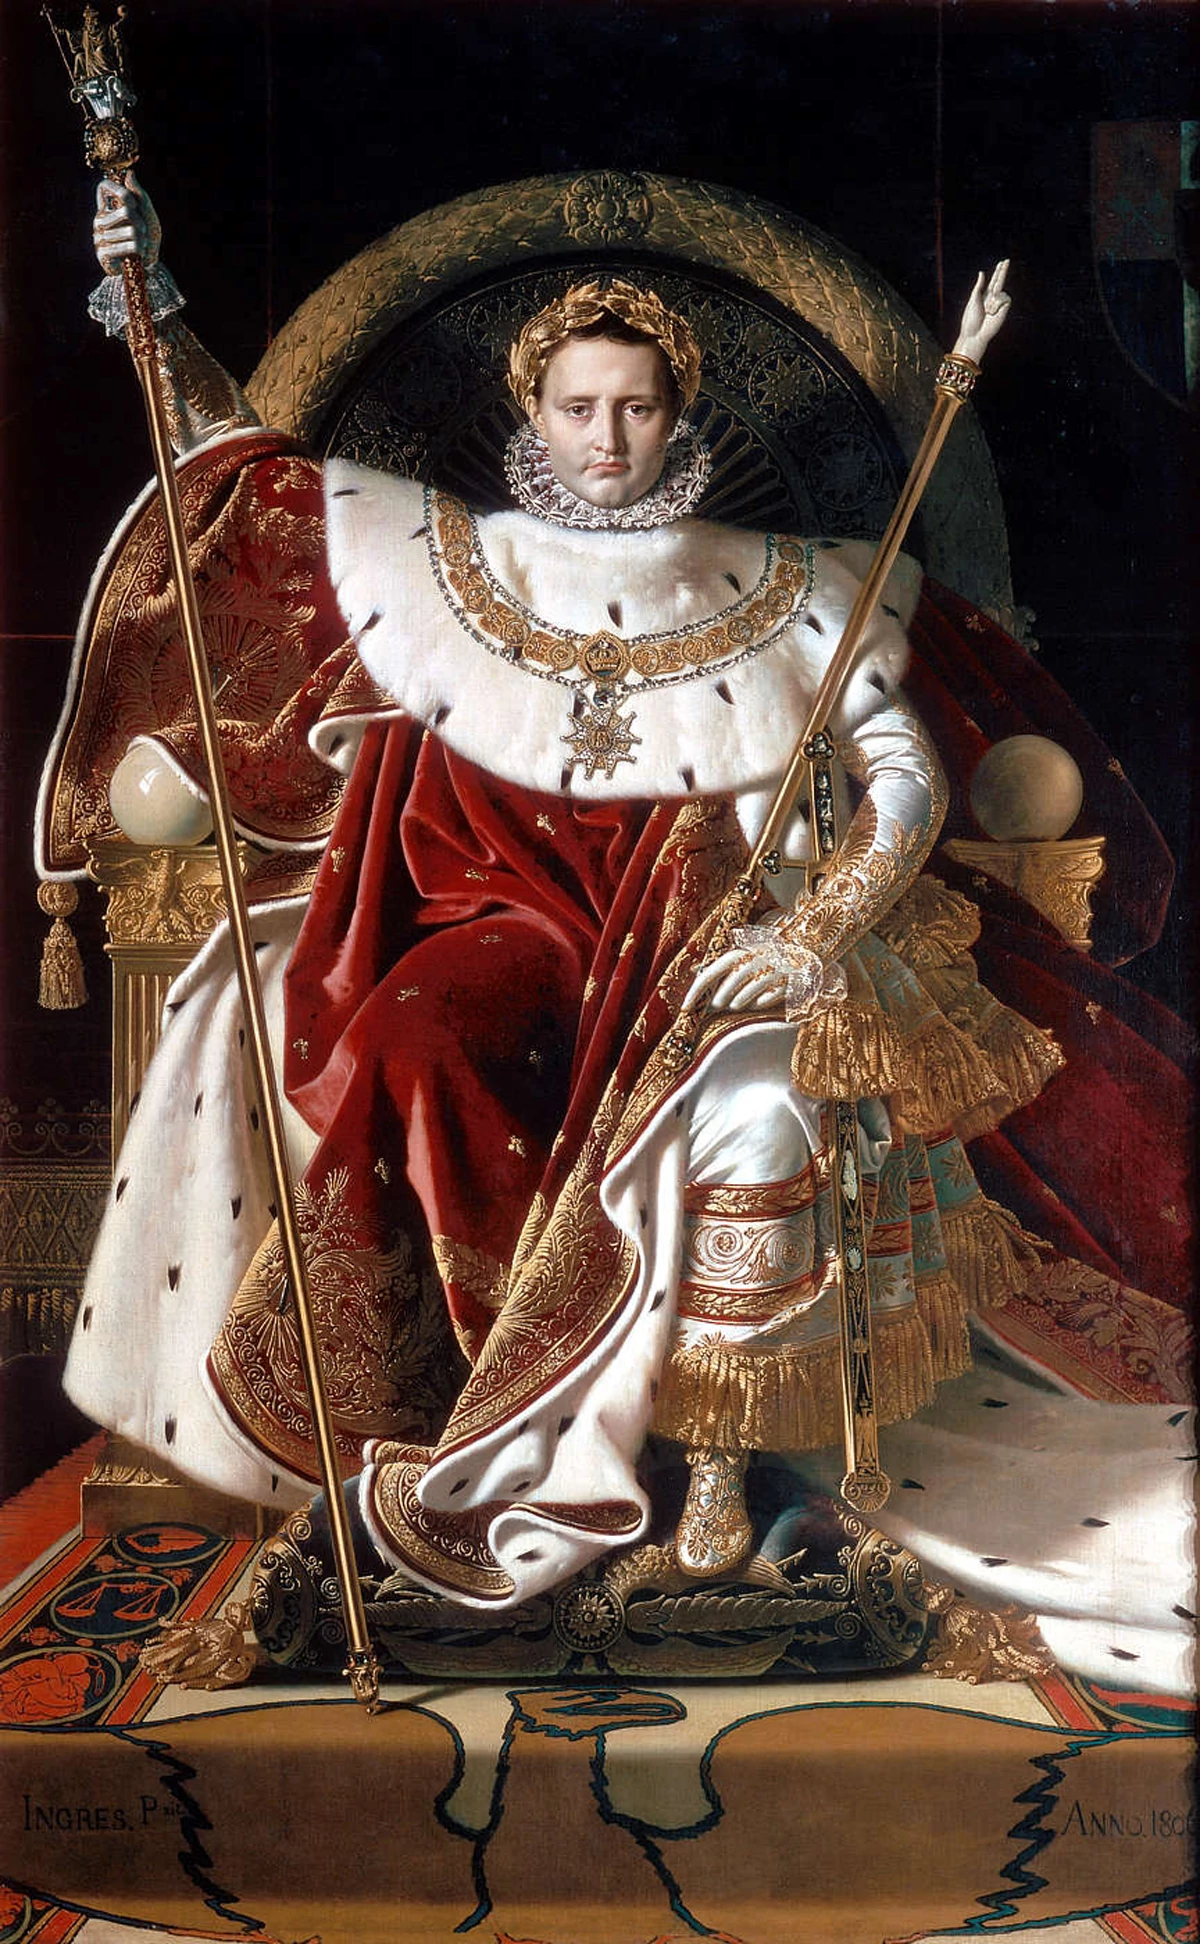 Napoleon I on his Imperial Throne, Jean-Auguste-Dominique Ingres